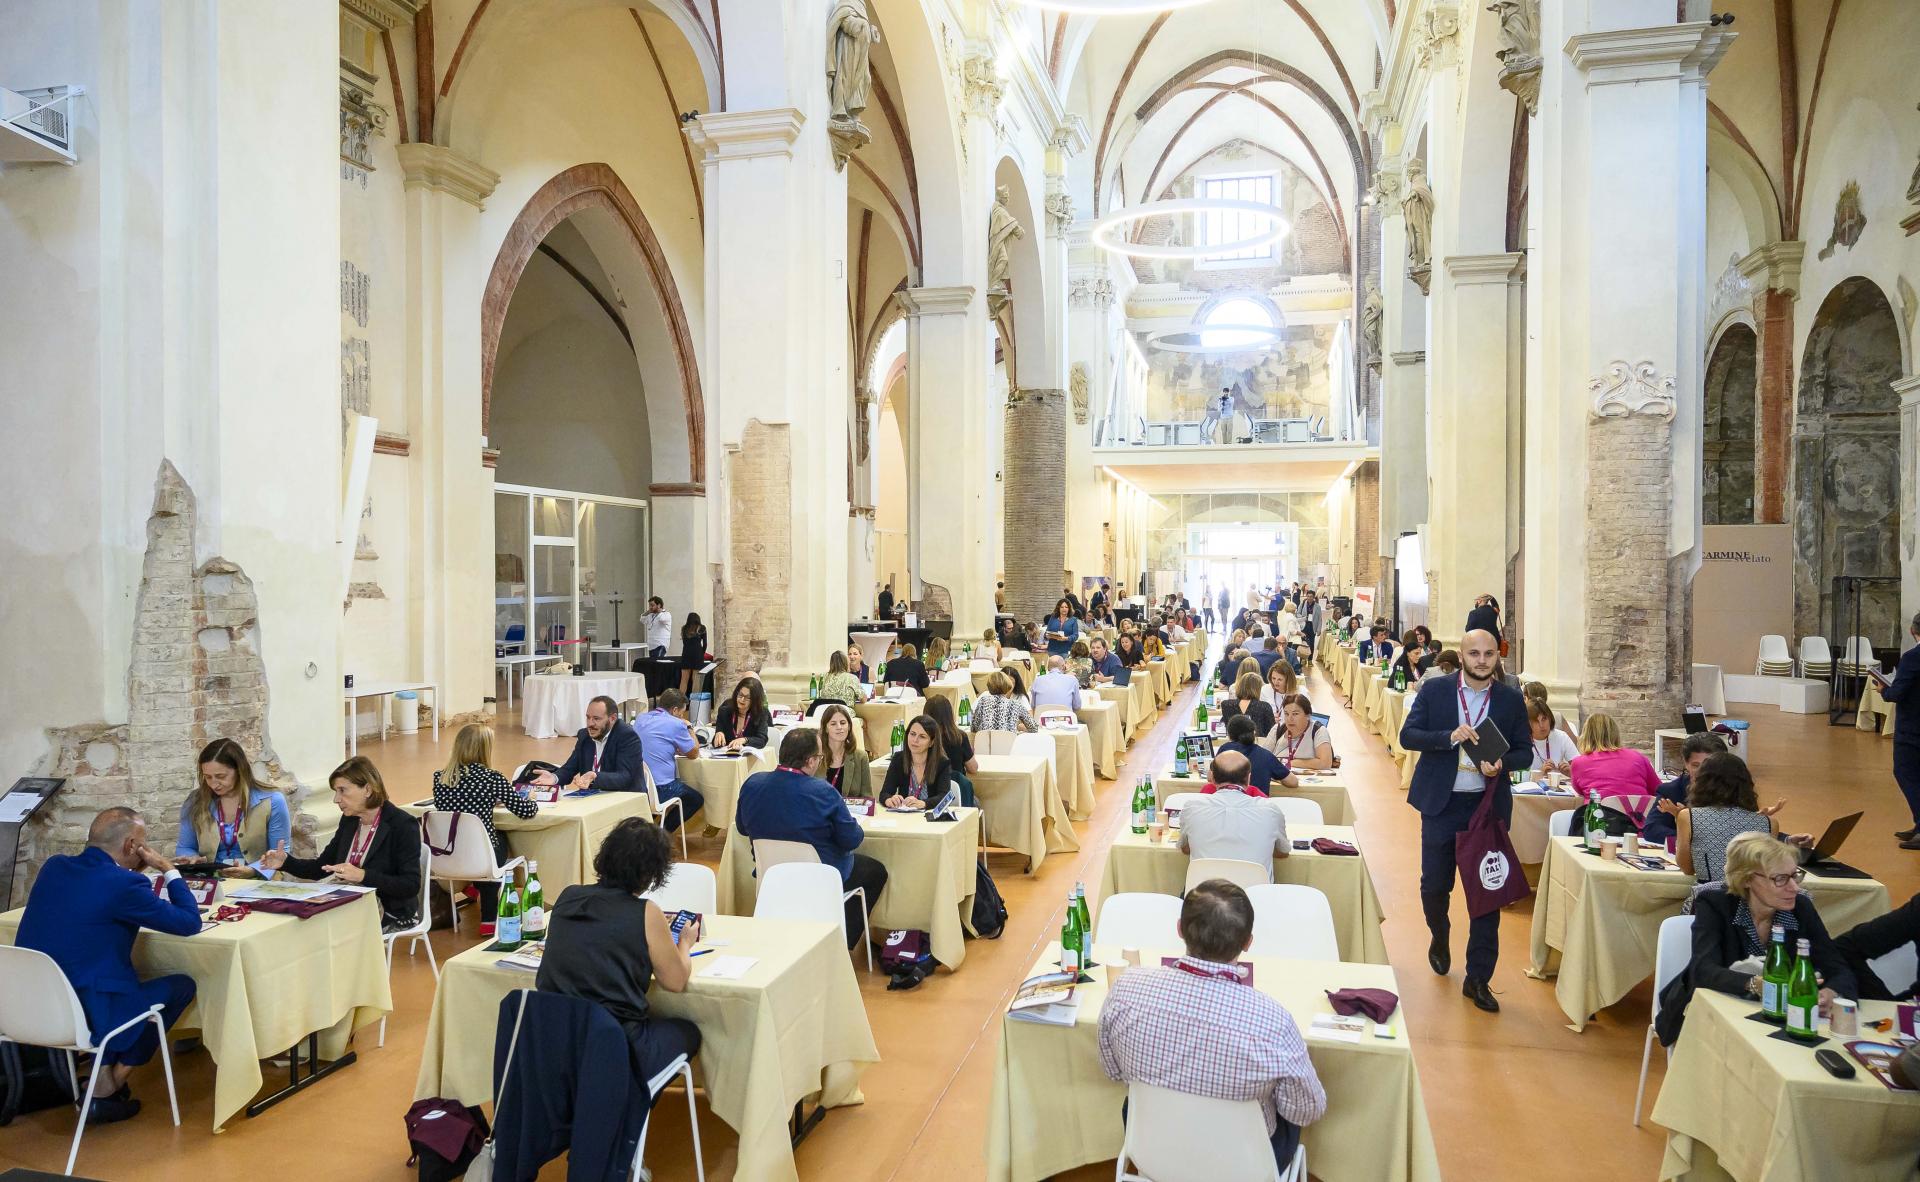 2023 Good Italy Workshop - Piacenza ex Chiesa del Carmine foto di Riccardo Gallini